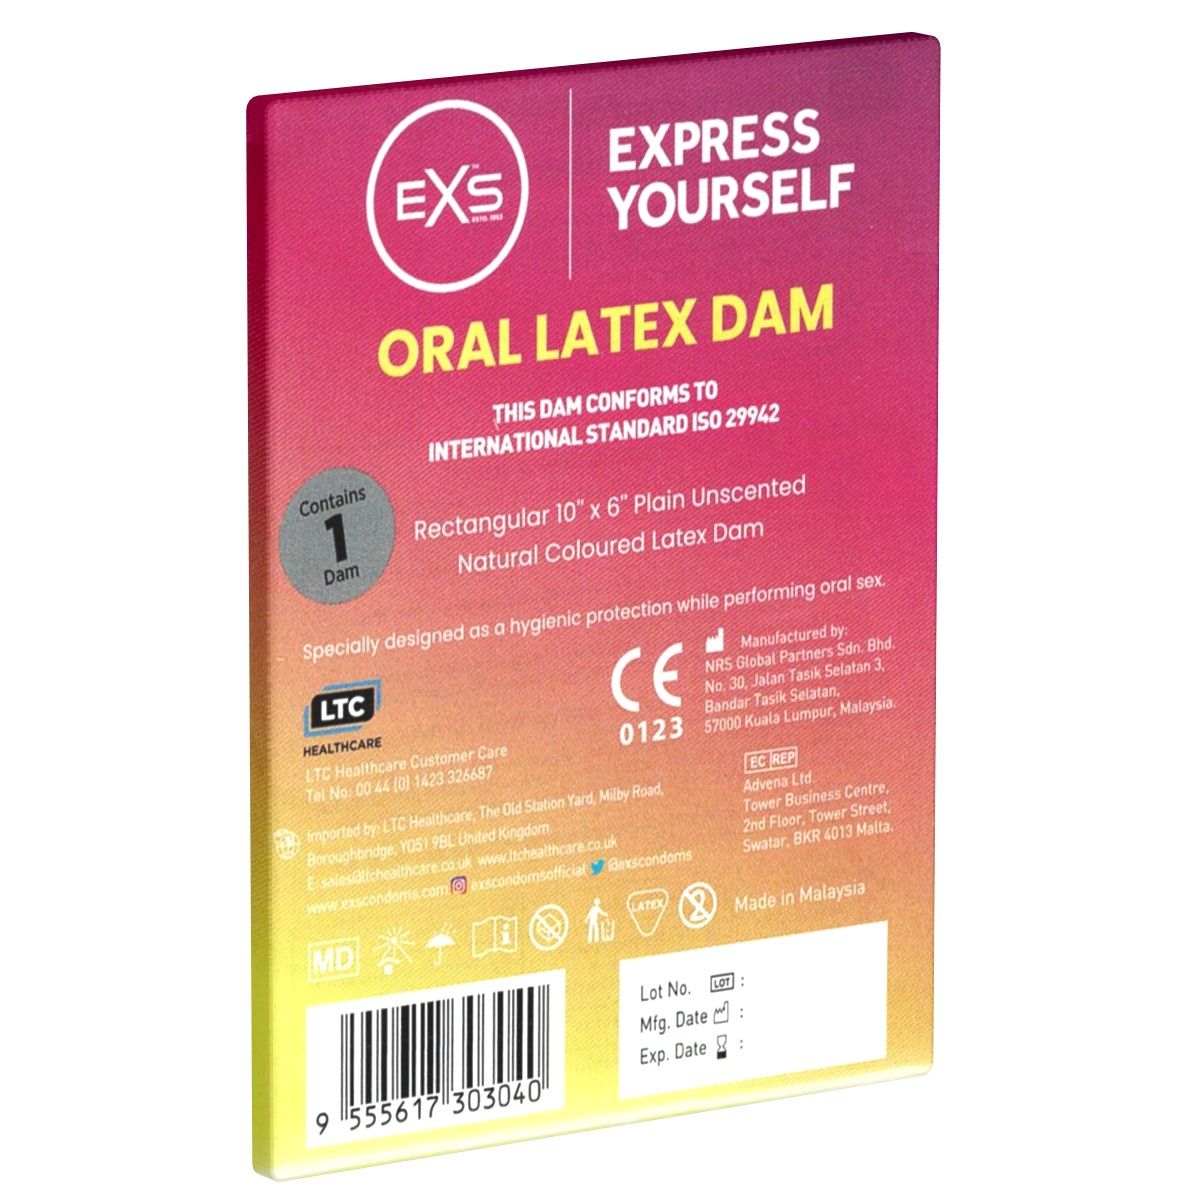 EXS *Oral Latex Dam*